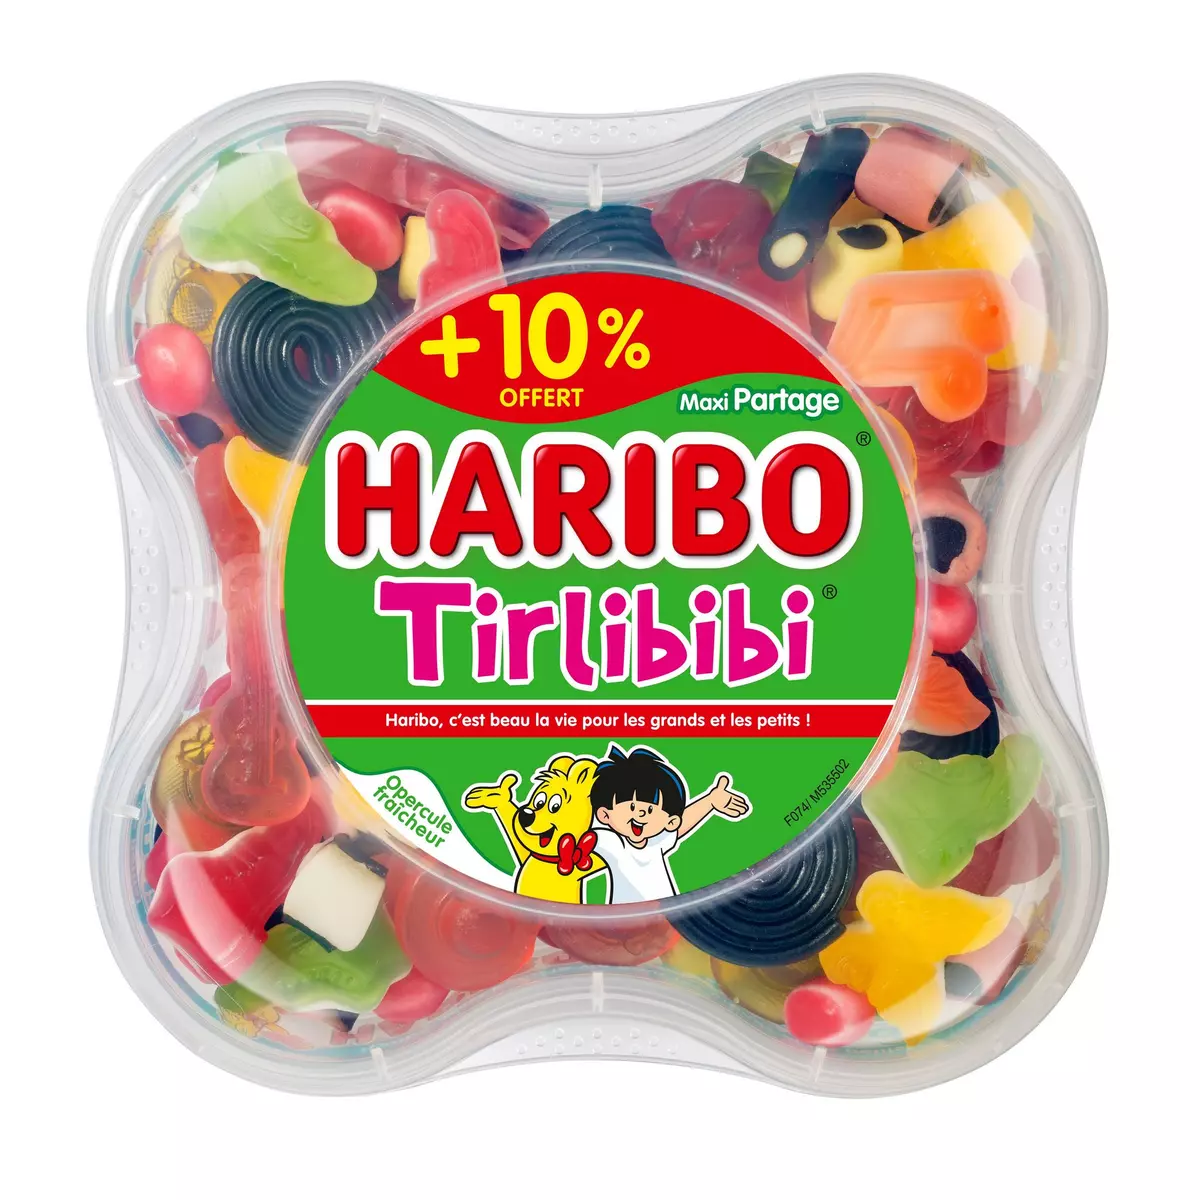 HARIBO Tirlibibi 1kg +10%